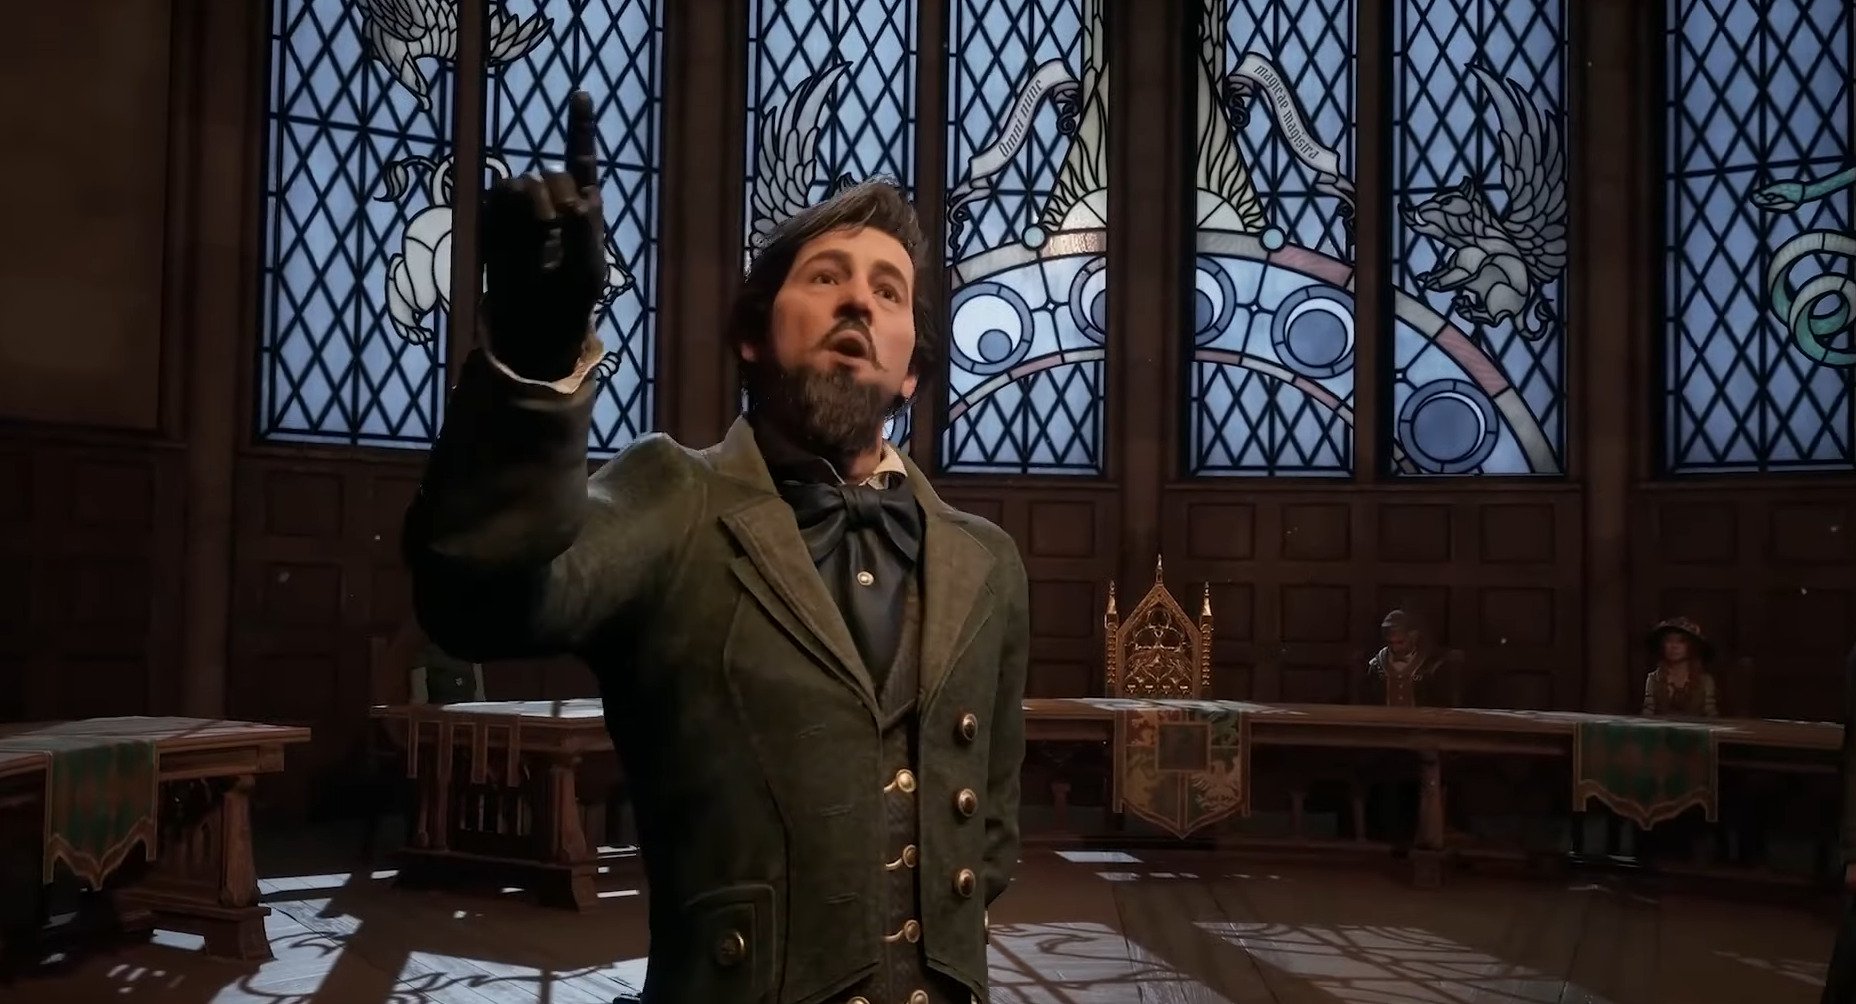 Hogwarts Legacy Gameplay and Plot Details Revealed